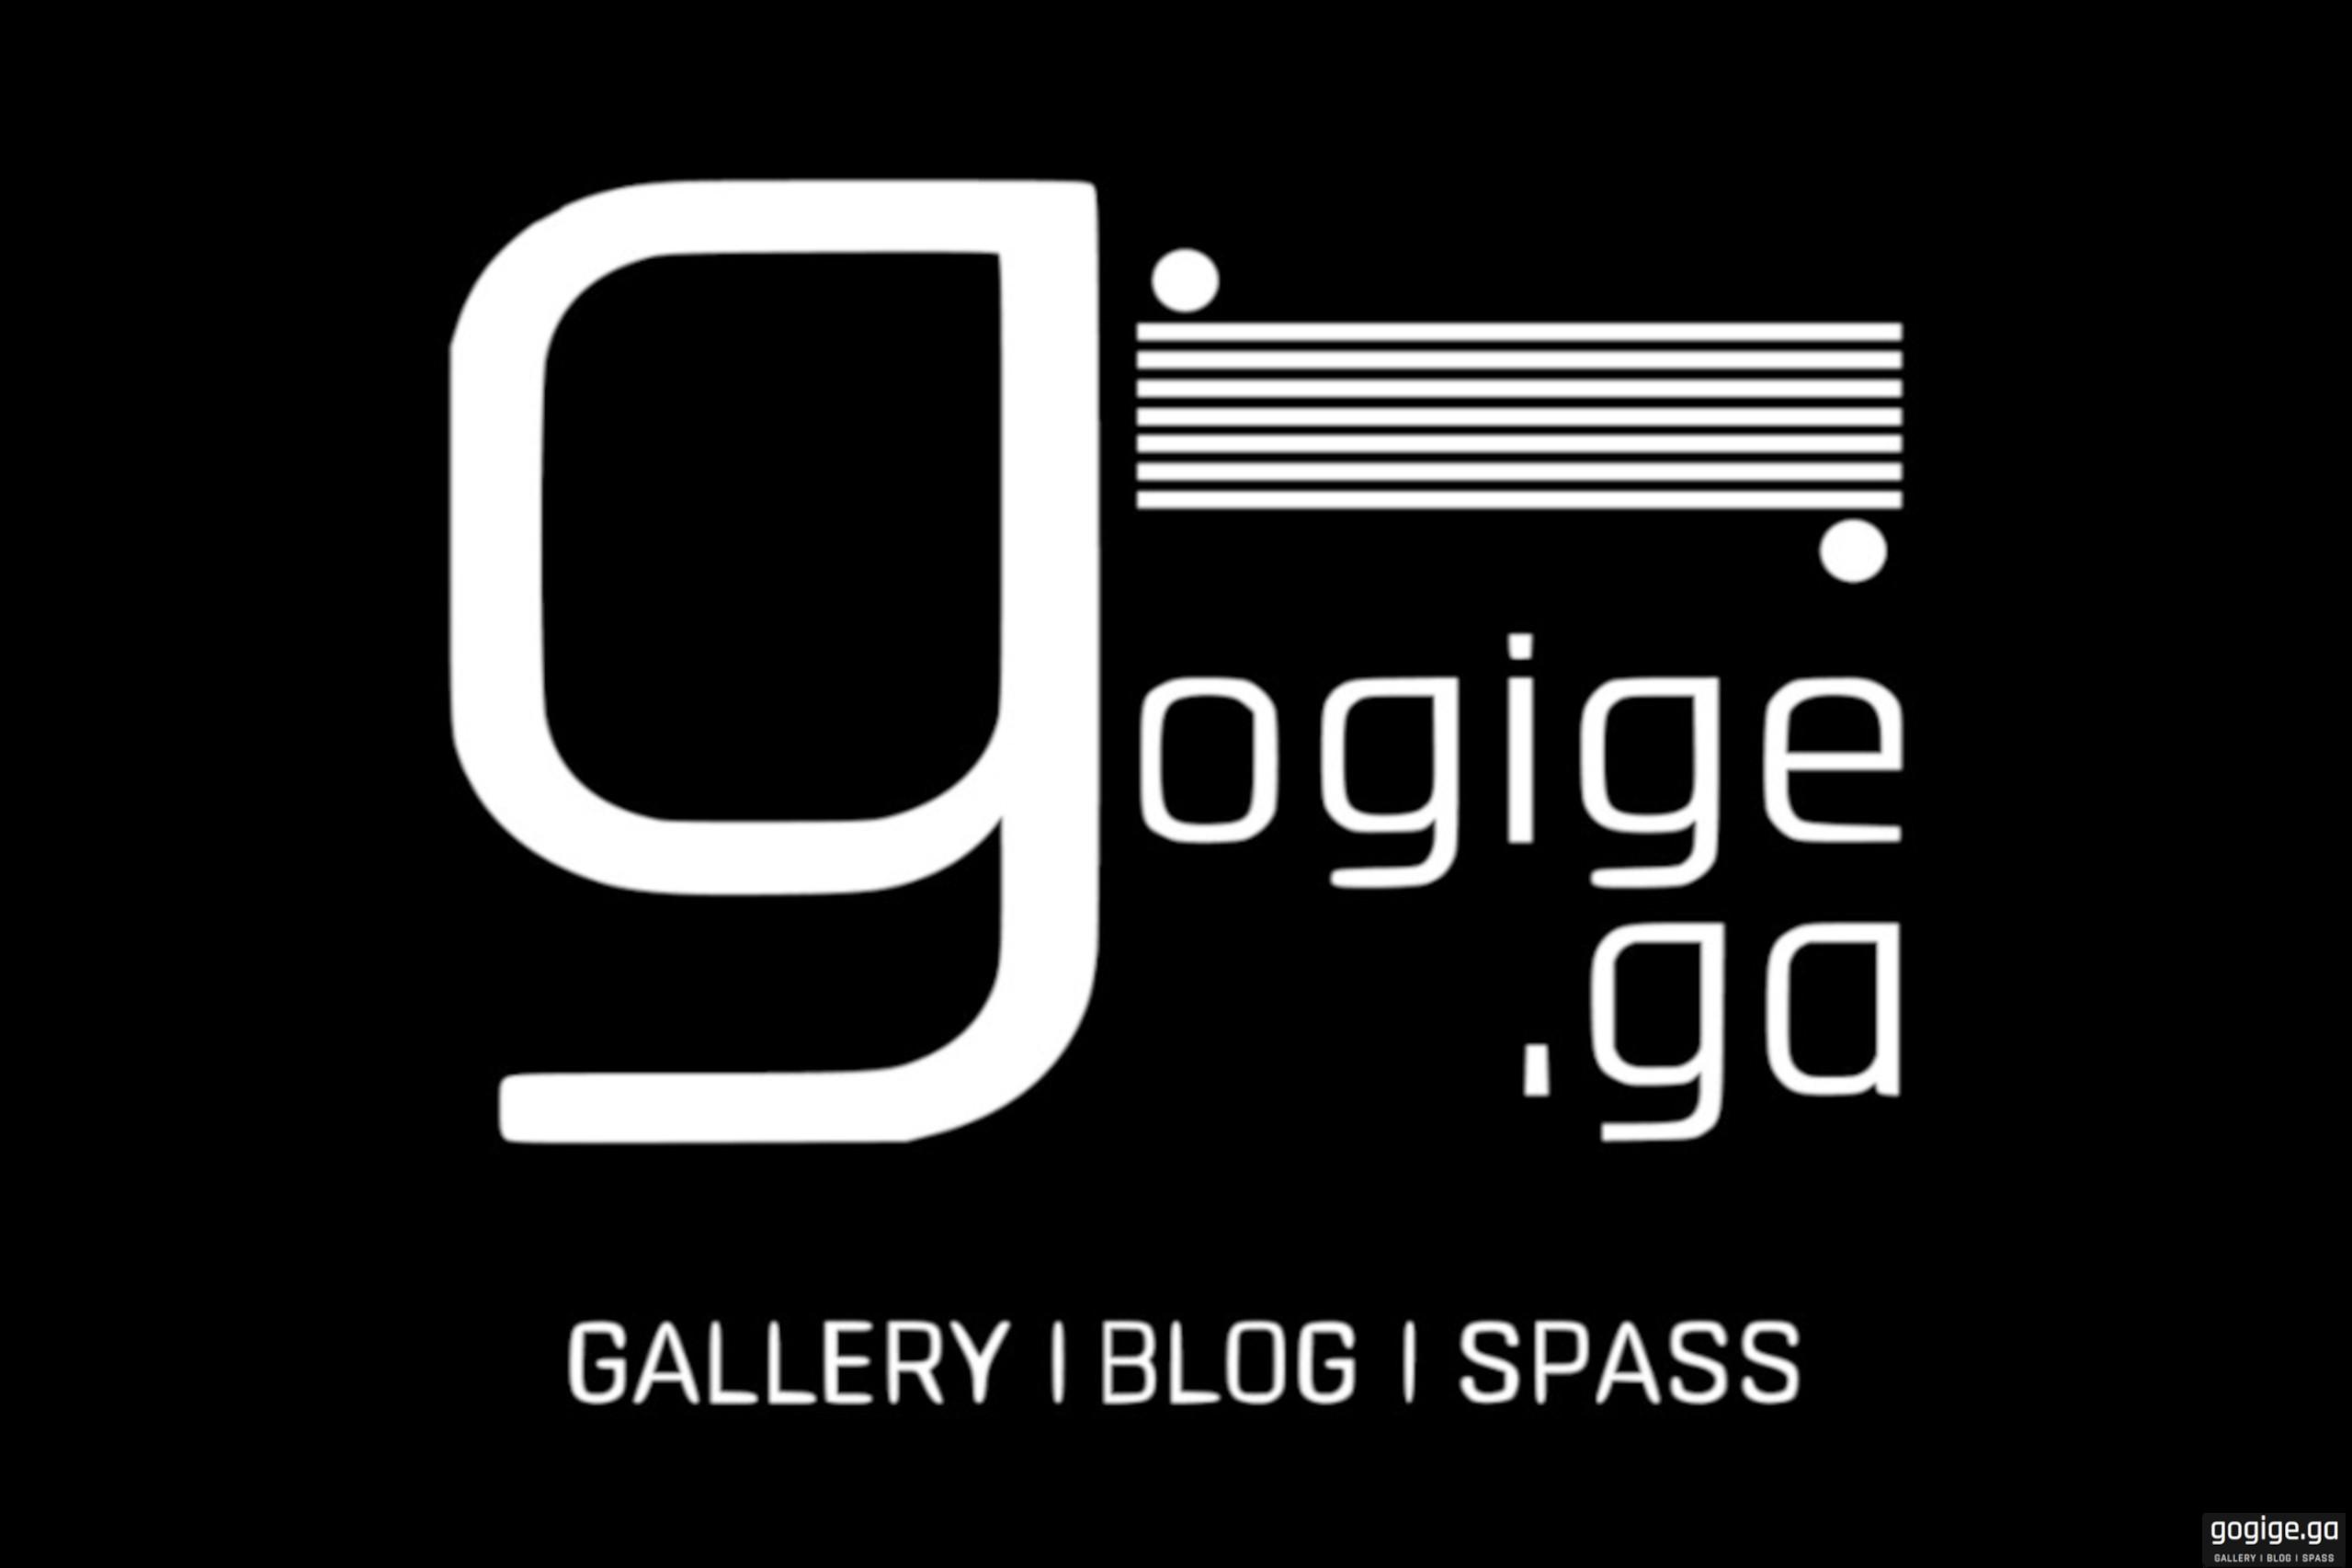 gogigega - gallery | blog | spass